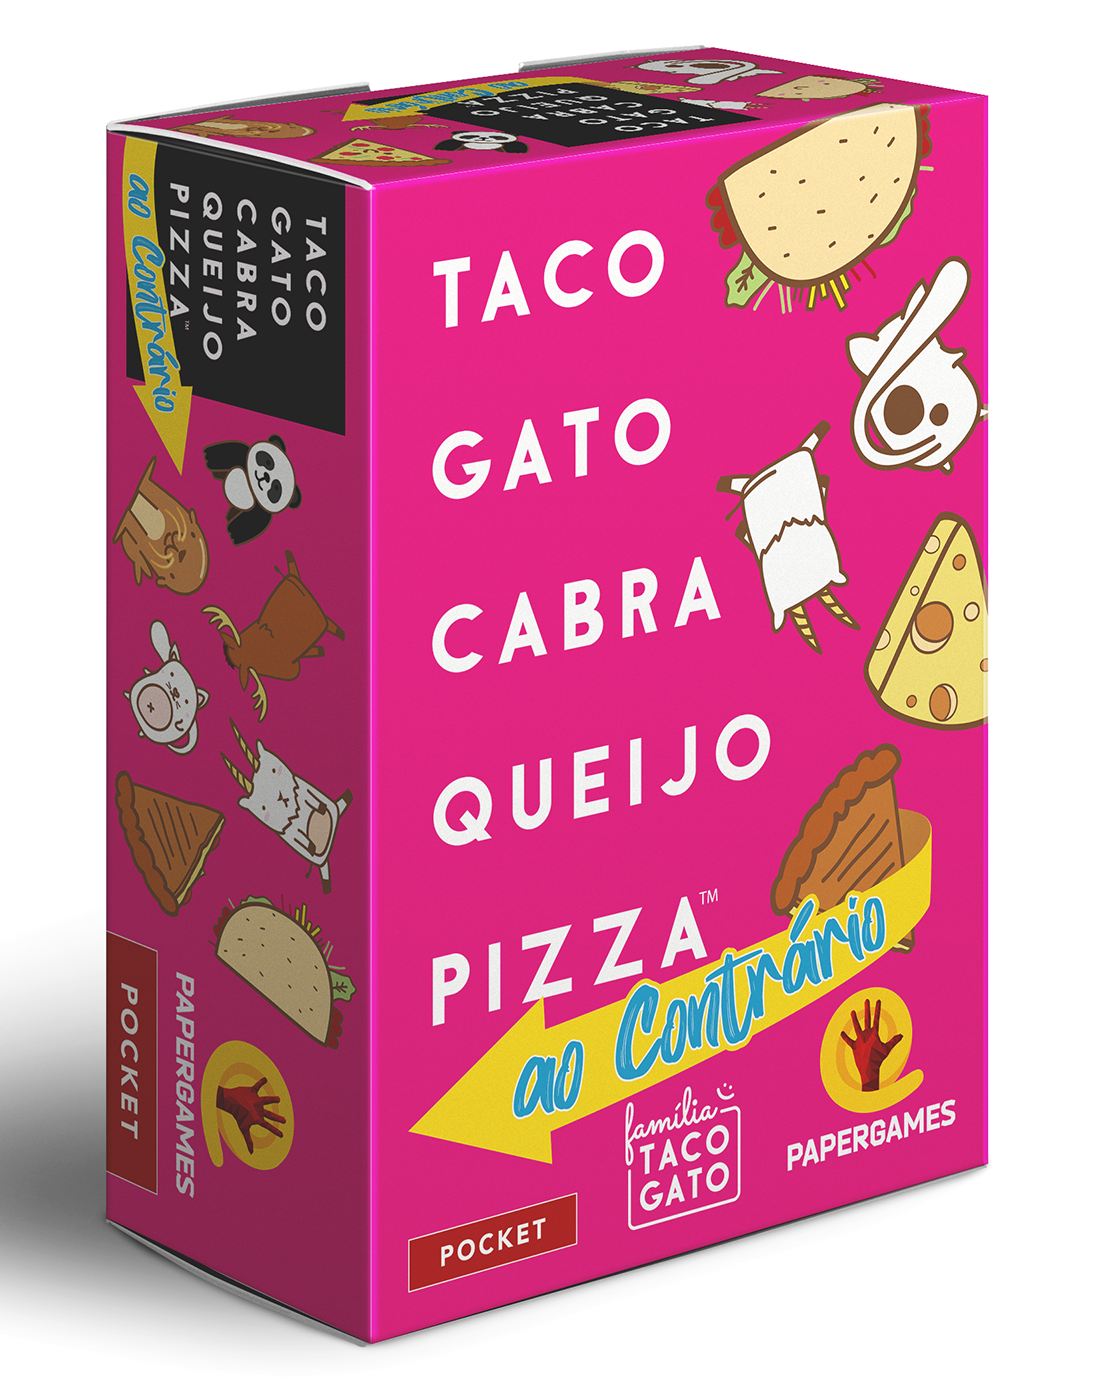 Taco Chapéu Bolo Presente Pizza (Família Taco Gato) - PaperGames